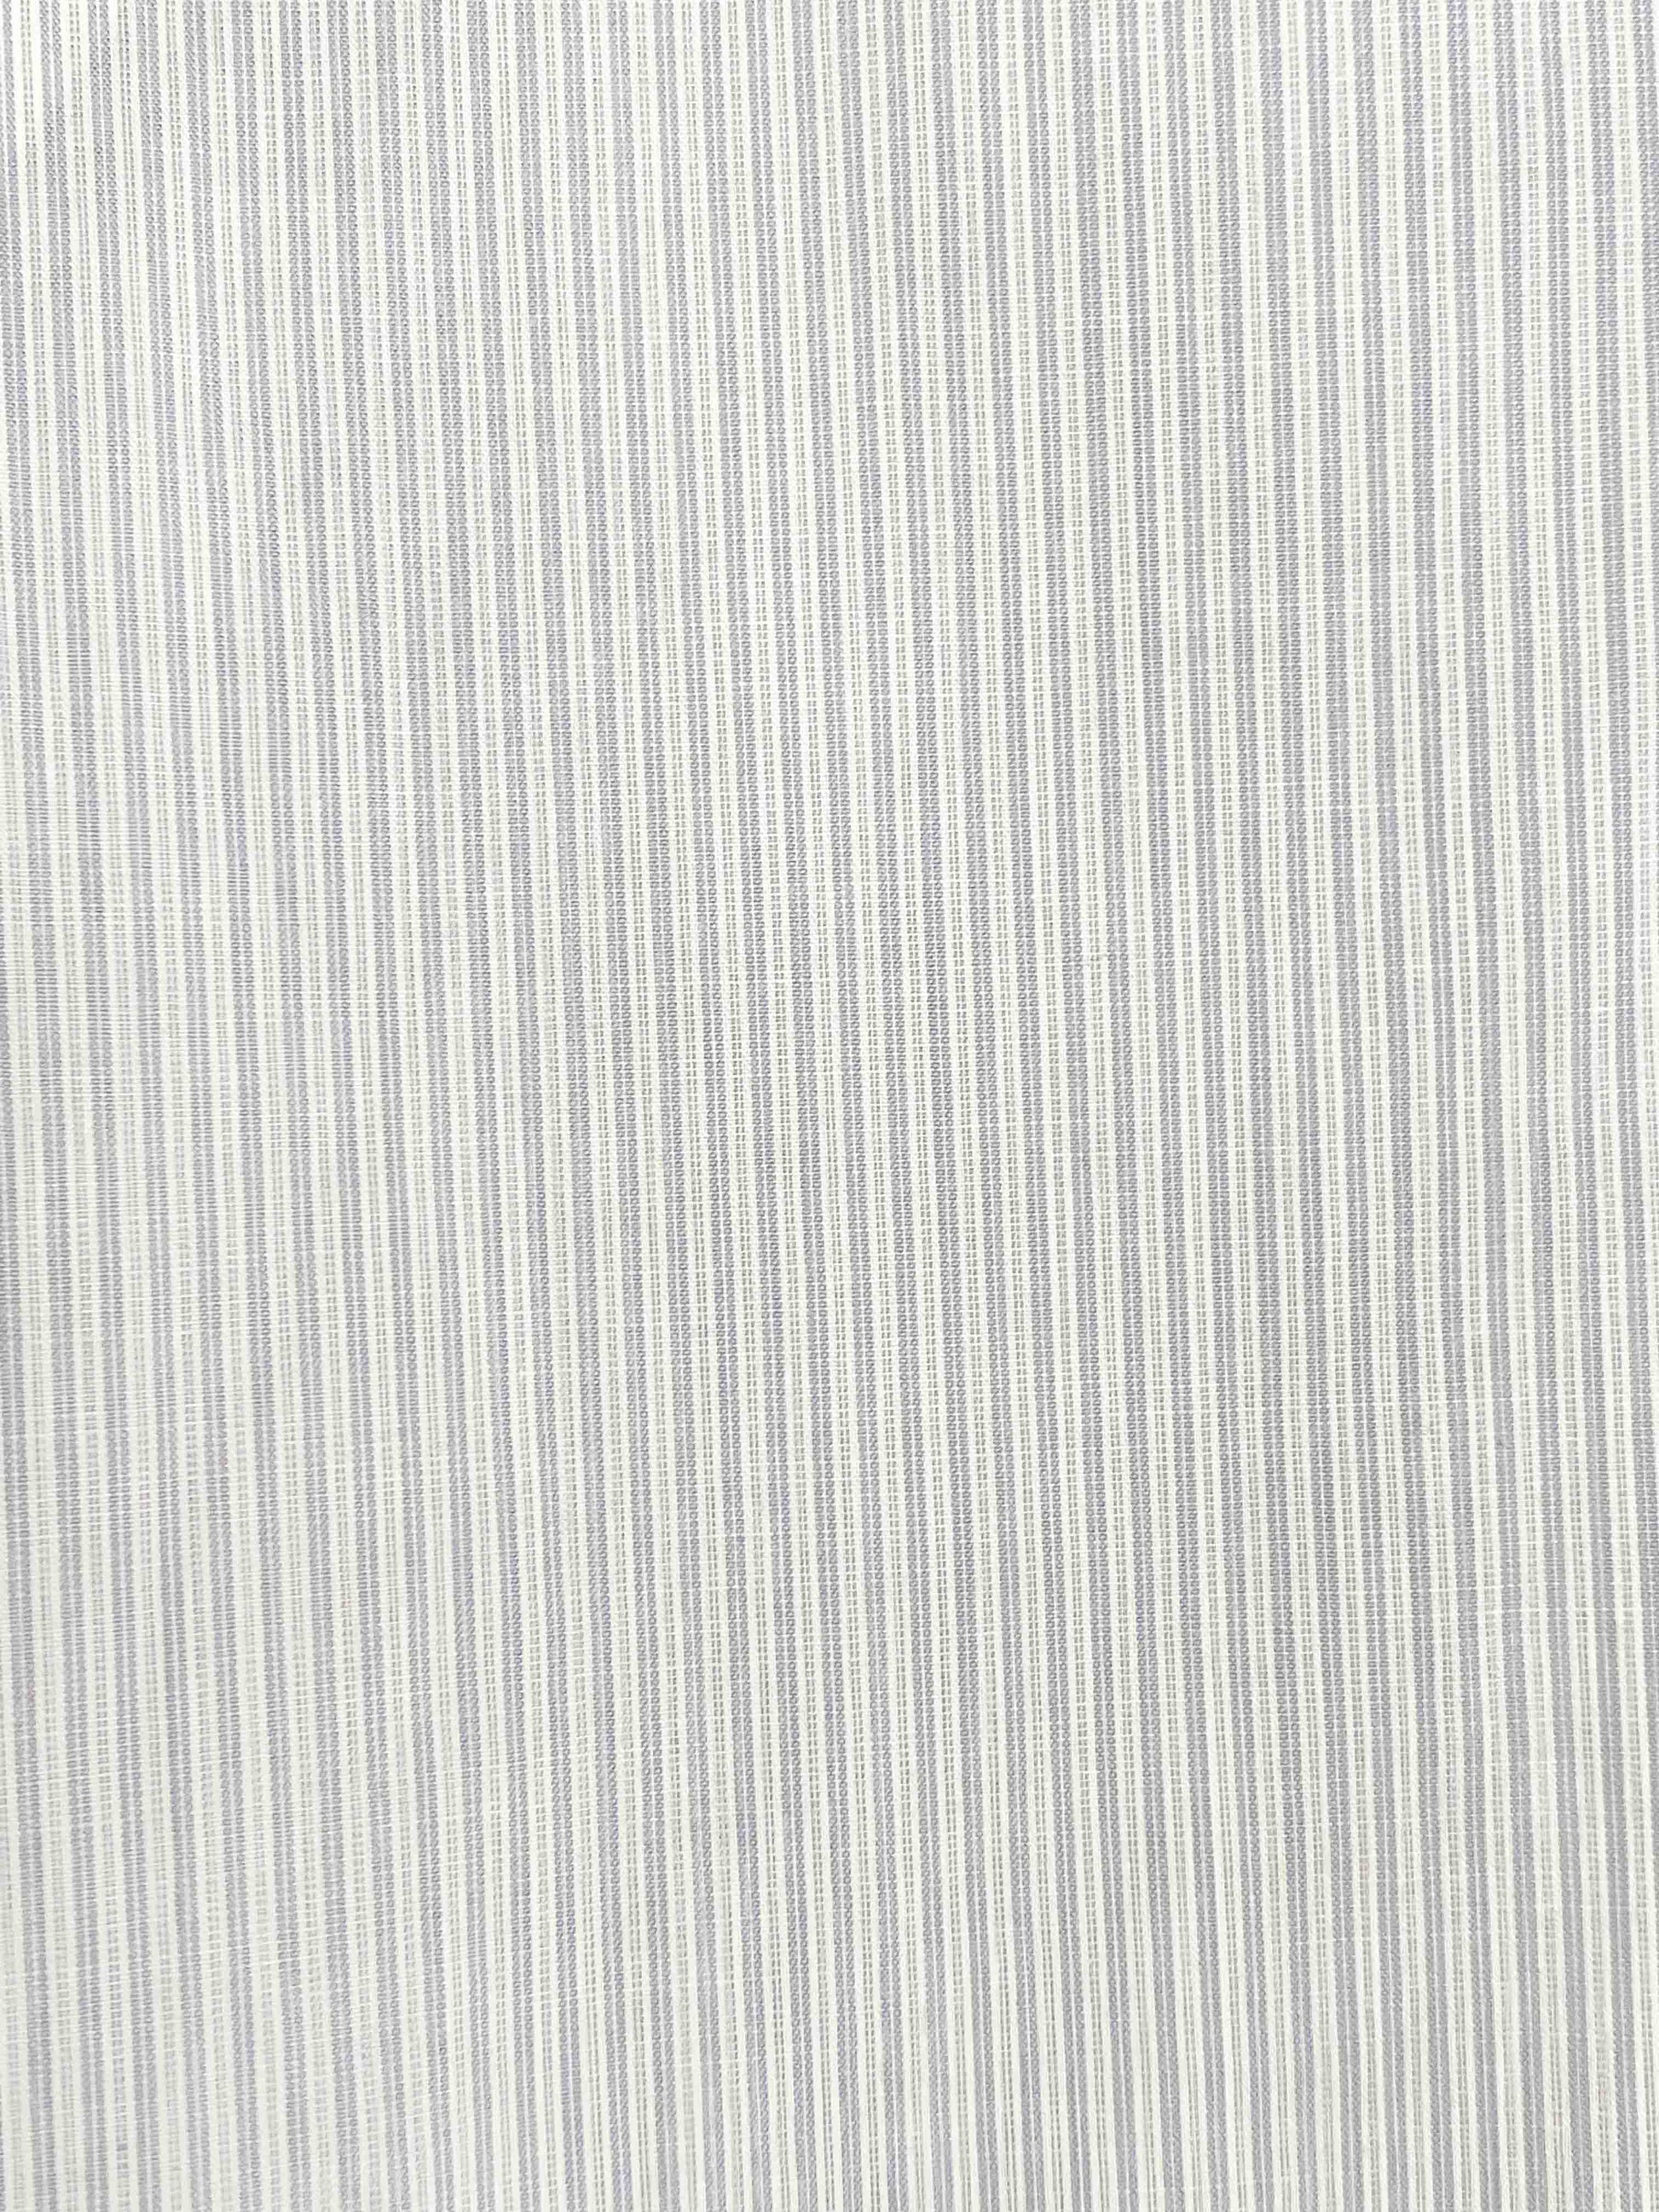 close up of dream stripe fabric, a soft blue and white woven micro stripe.